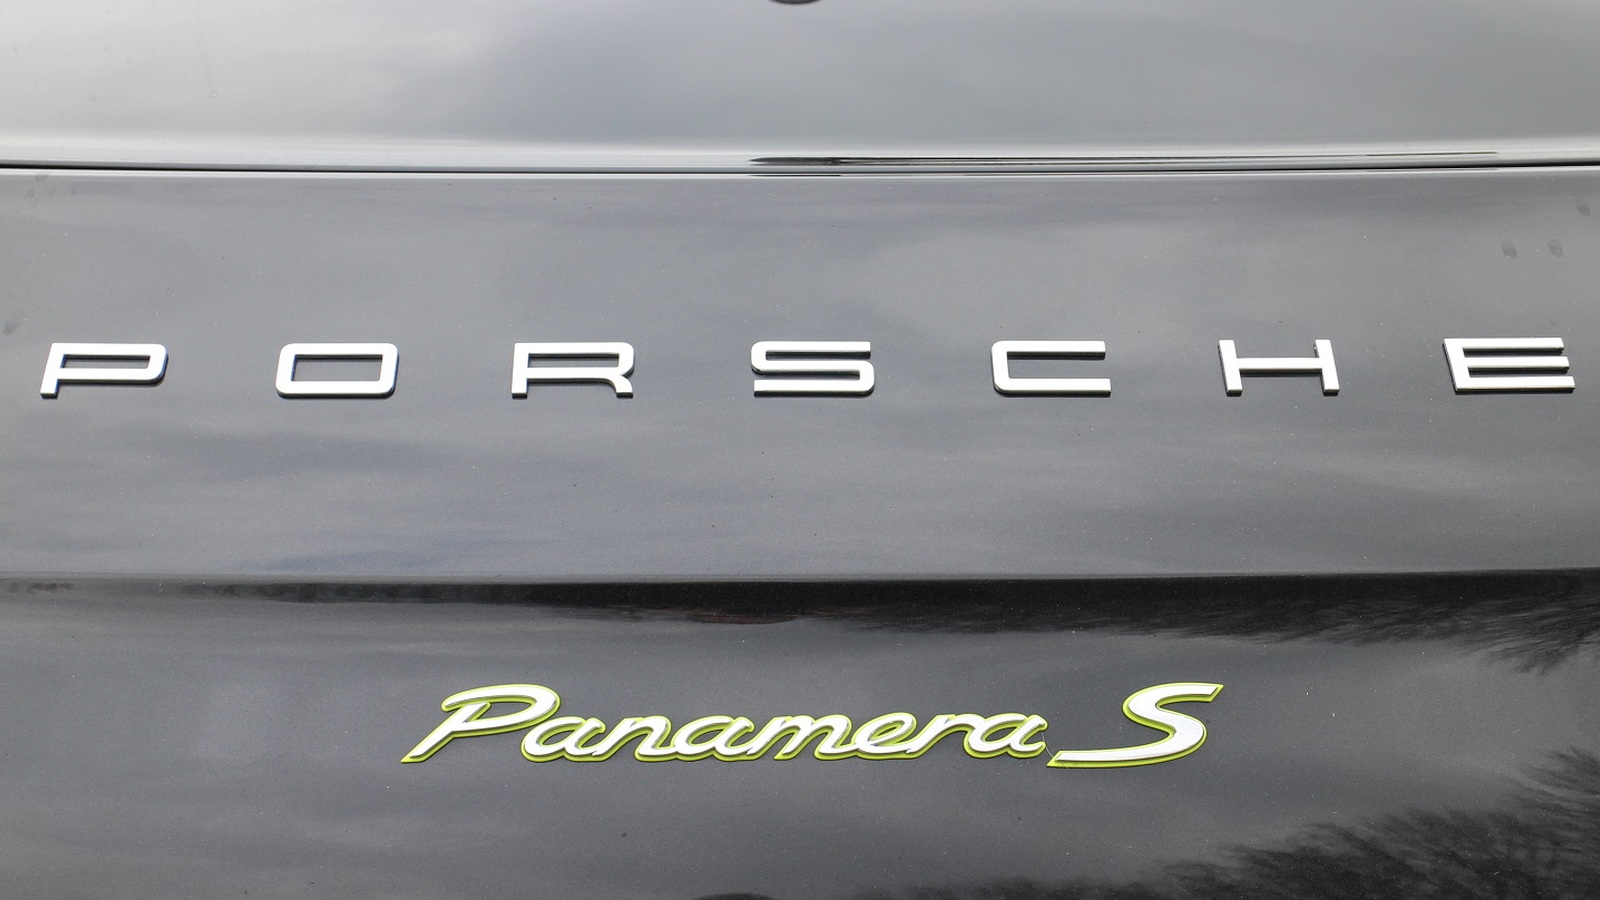 2014 Porsche Panamera S E-Hybrid, Catskill Mountains, NY, Apr 2015